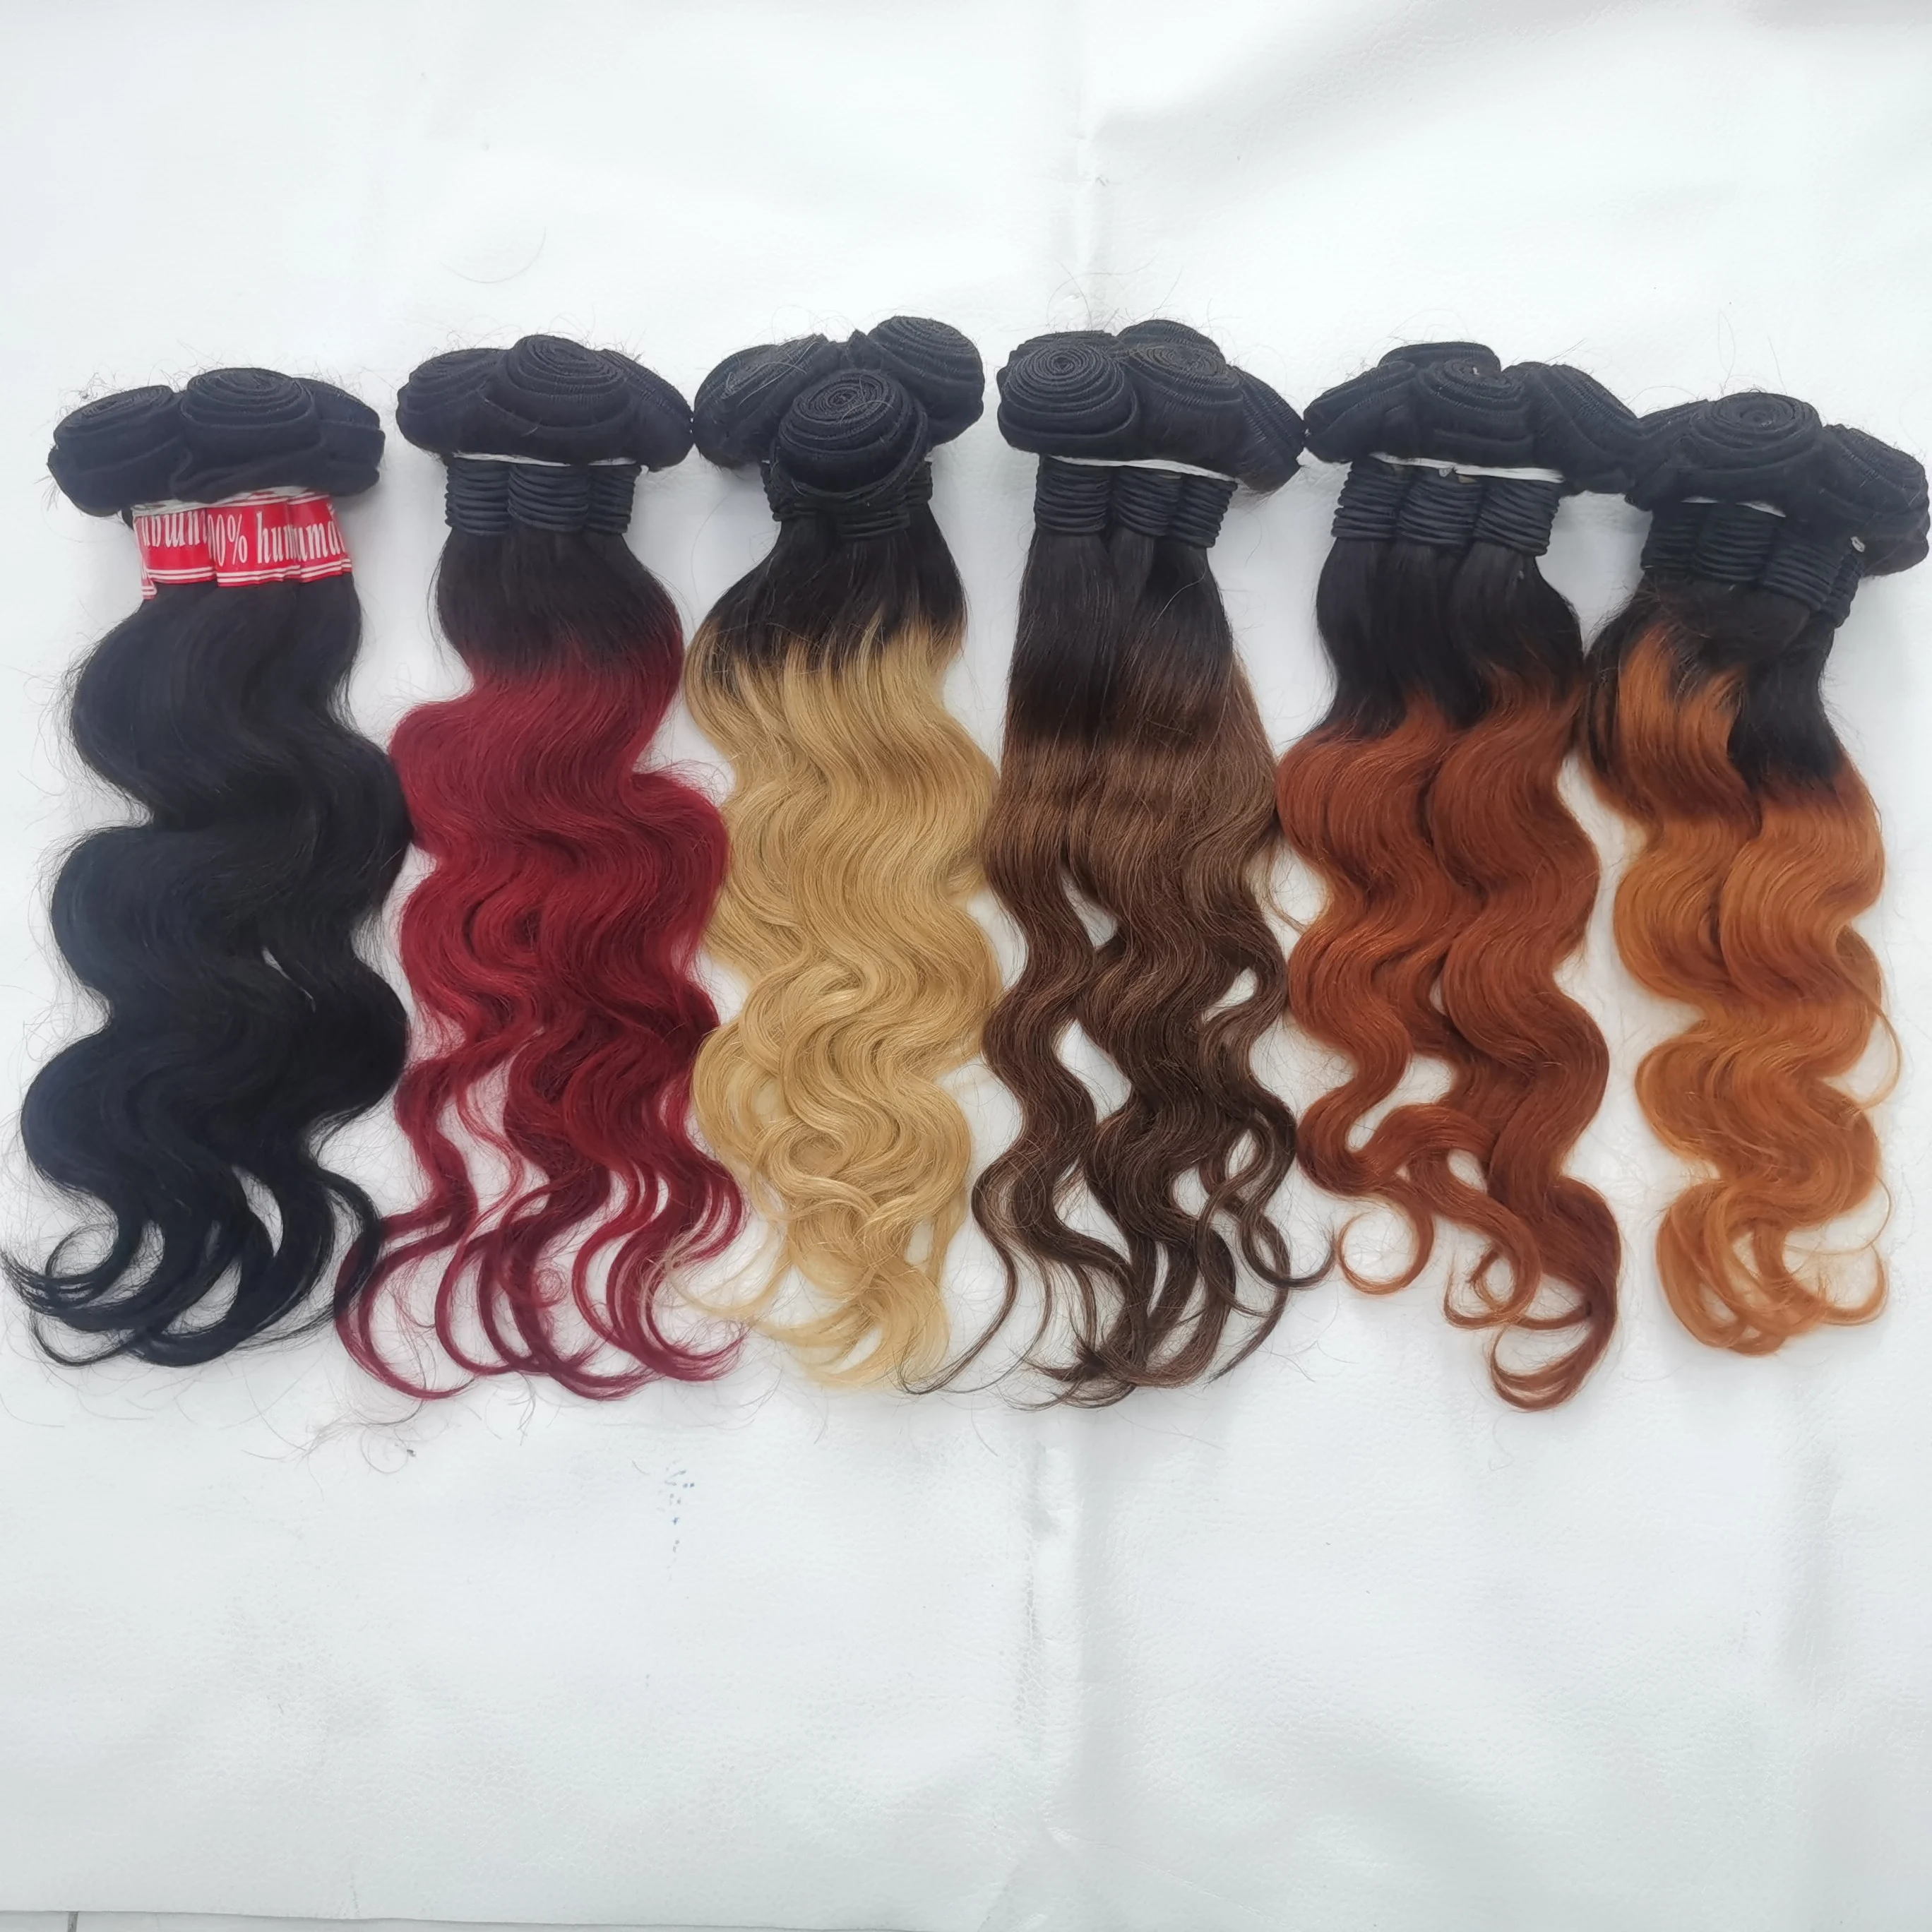 

Letsfly Body Wavy Human Hair Dark Root Ombre Color Hair Hot Selling Free Shipping 20PCS/Lot Virgin Hair Bundles For Black Woman